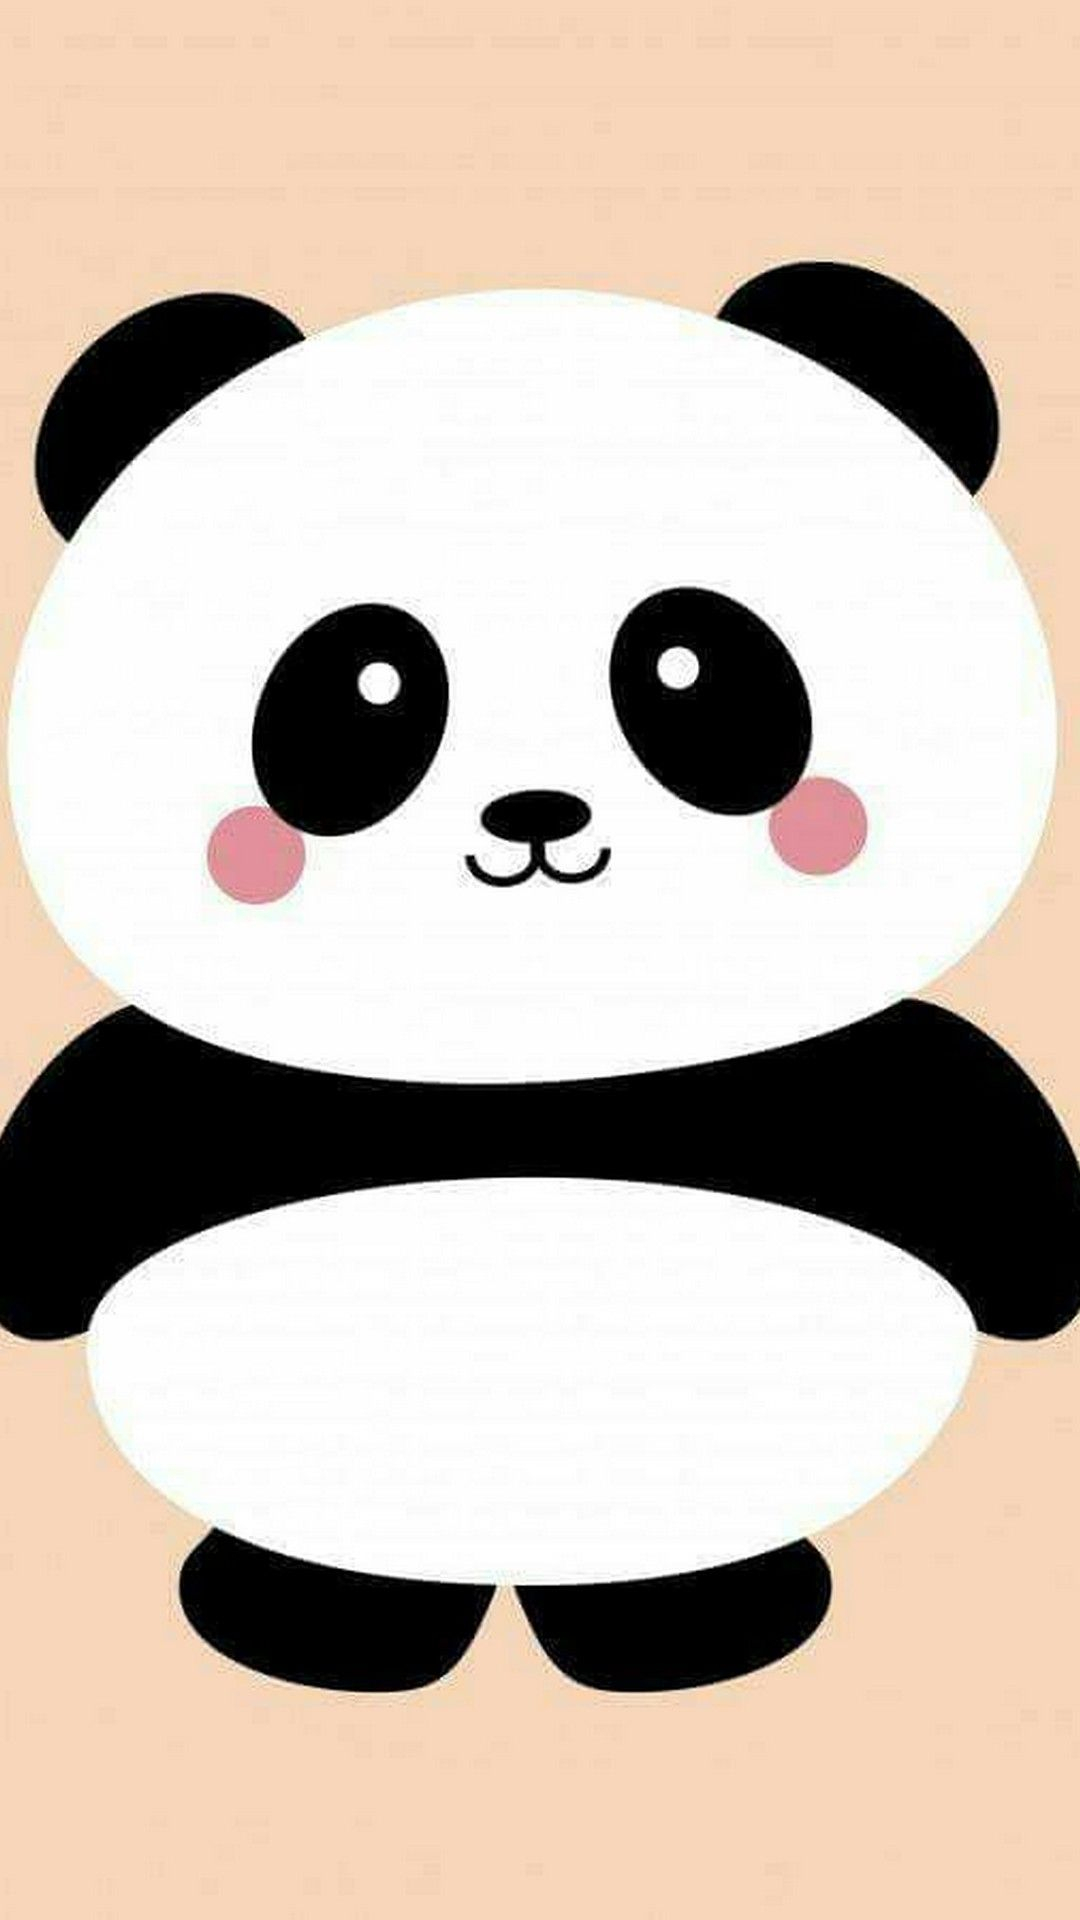 1080x1920 Baby Panda iPhone Wallpaper HD | Best HD Wallpapers | Cute panda wallpaper, Panda wallpapers, Panda wallpaper iphone